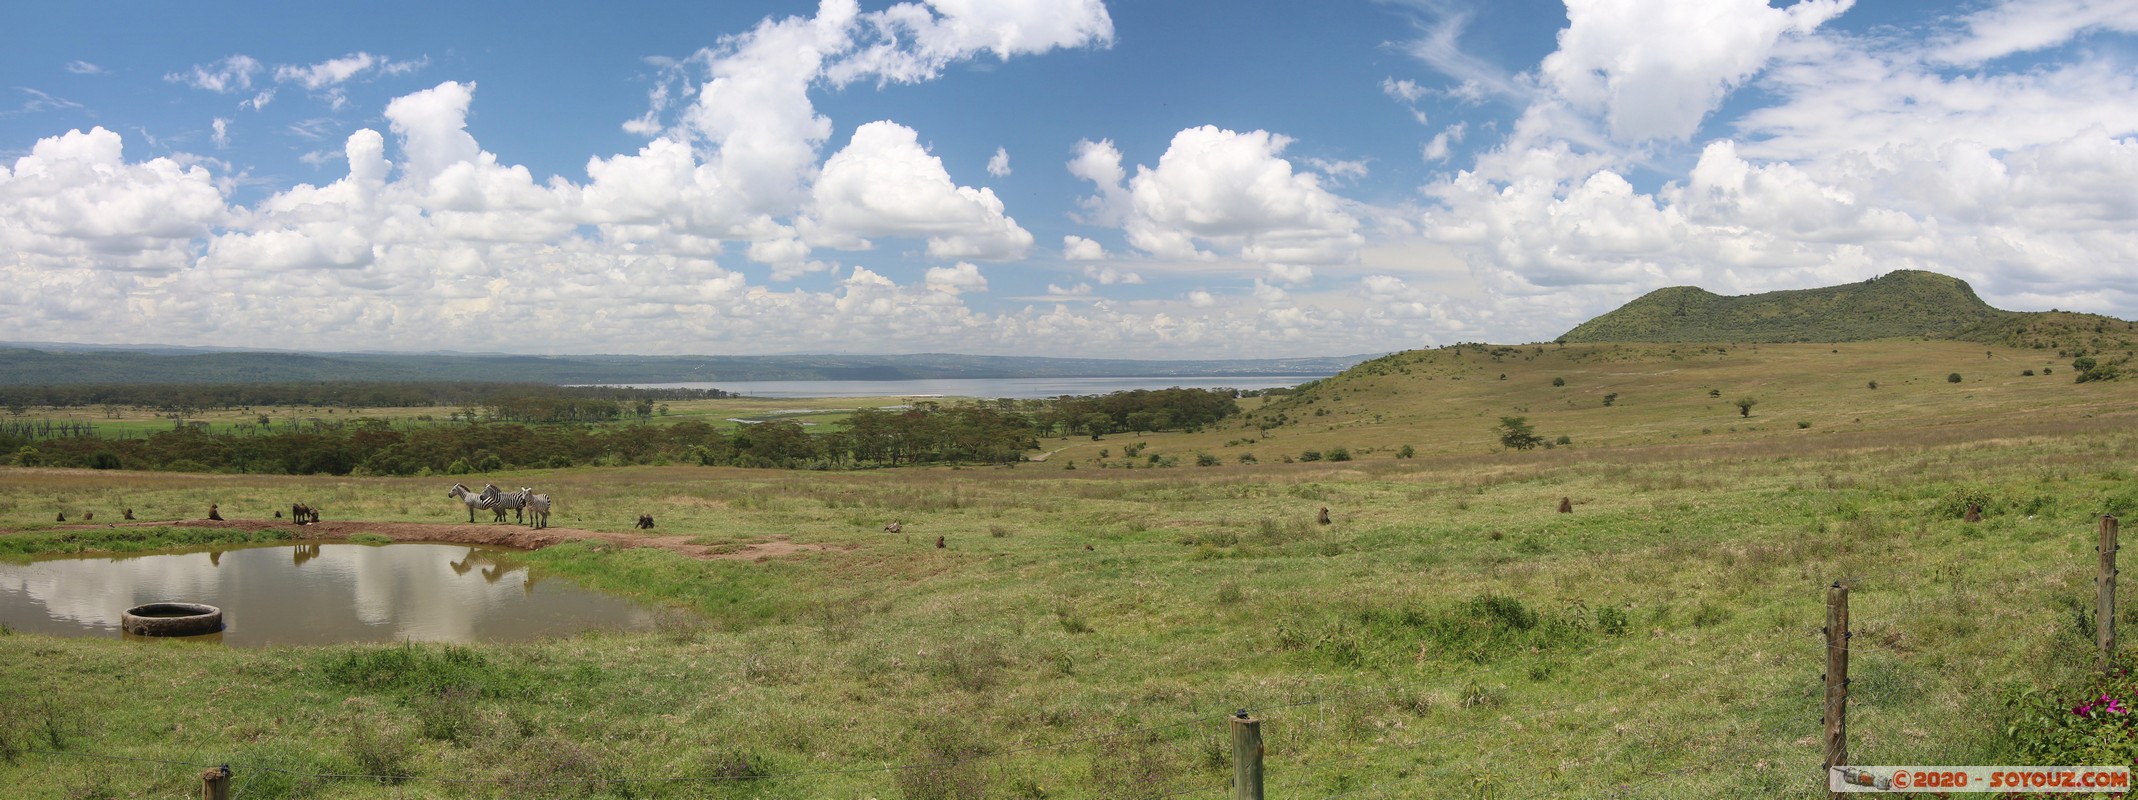 Lake Nakuru National Park - Panorama
Mots-clés: KEN Kenya Nakuru Nderit Lake Nakuru National Park Lake Nakuru Lodge panorama